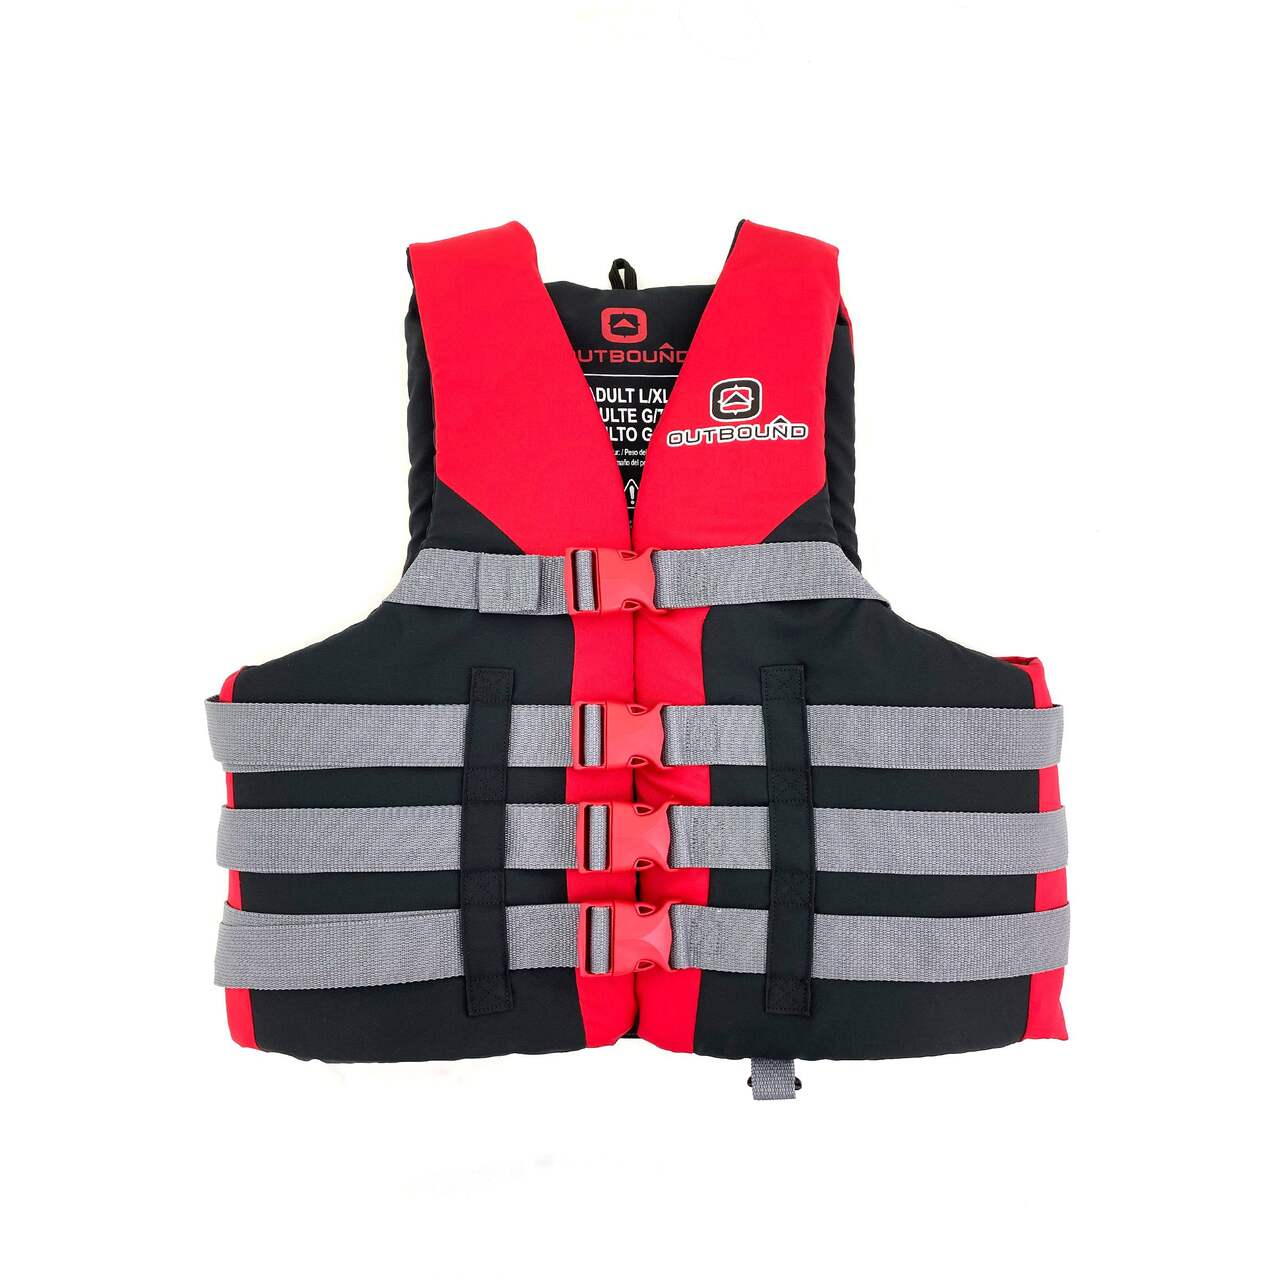 Fluid Youth Evoprene PFD/Life Jacket, Navy/Red